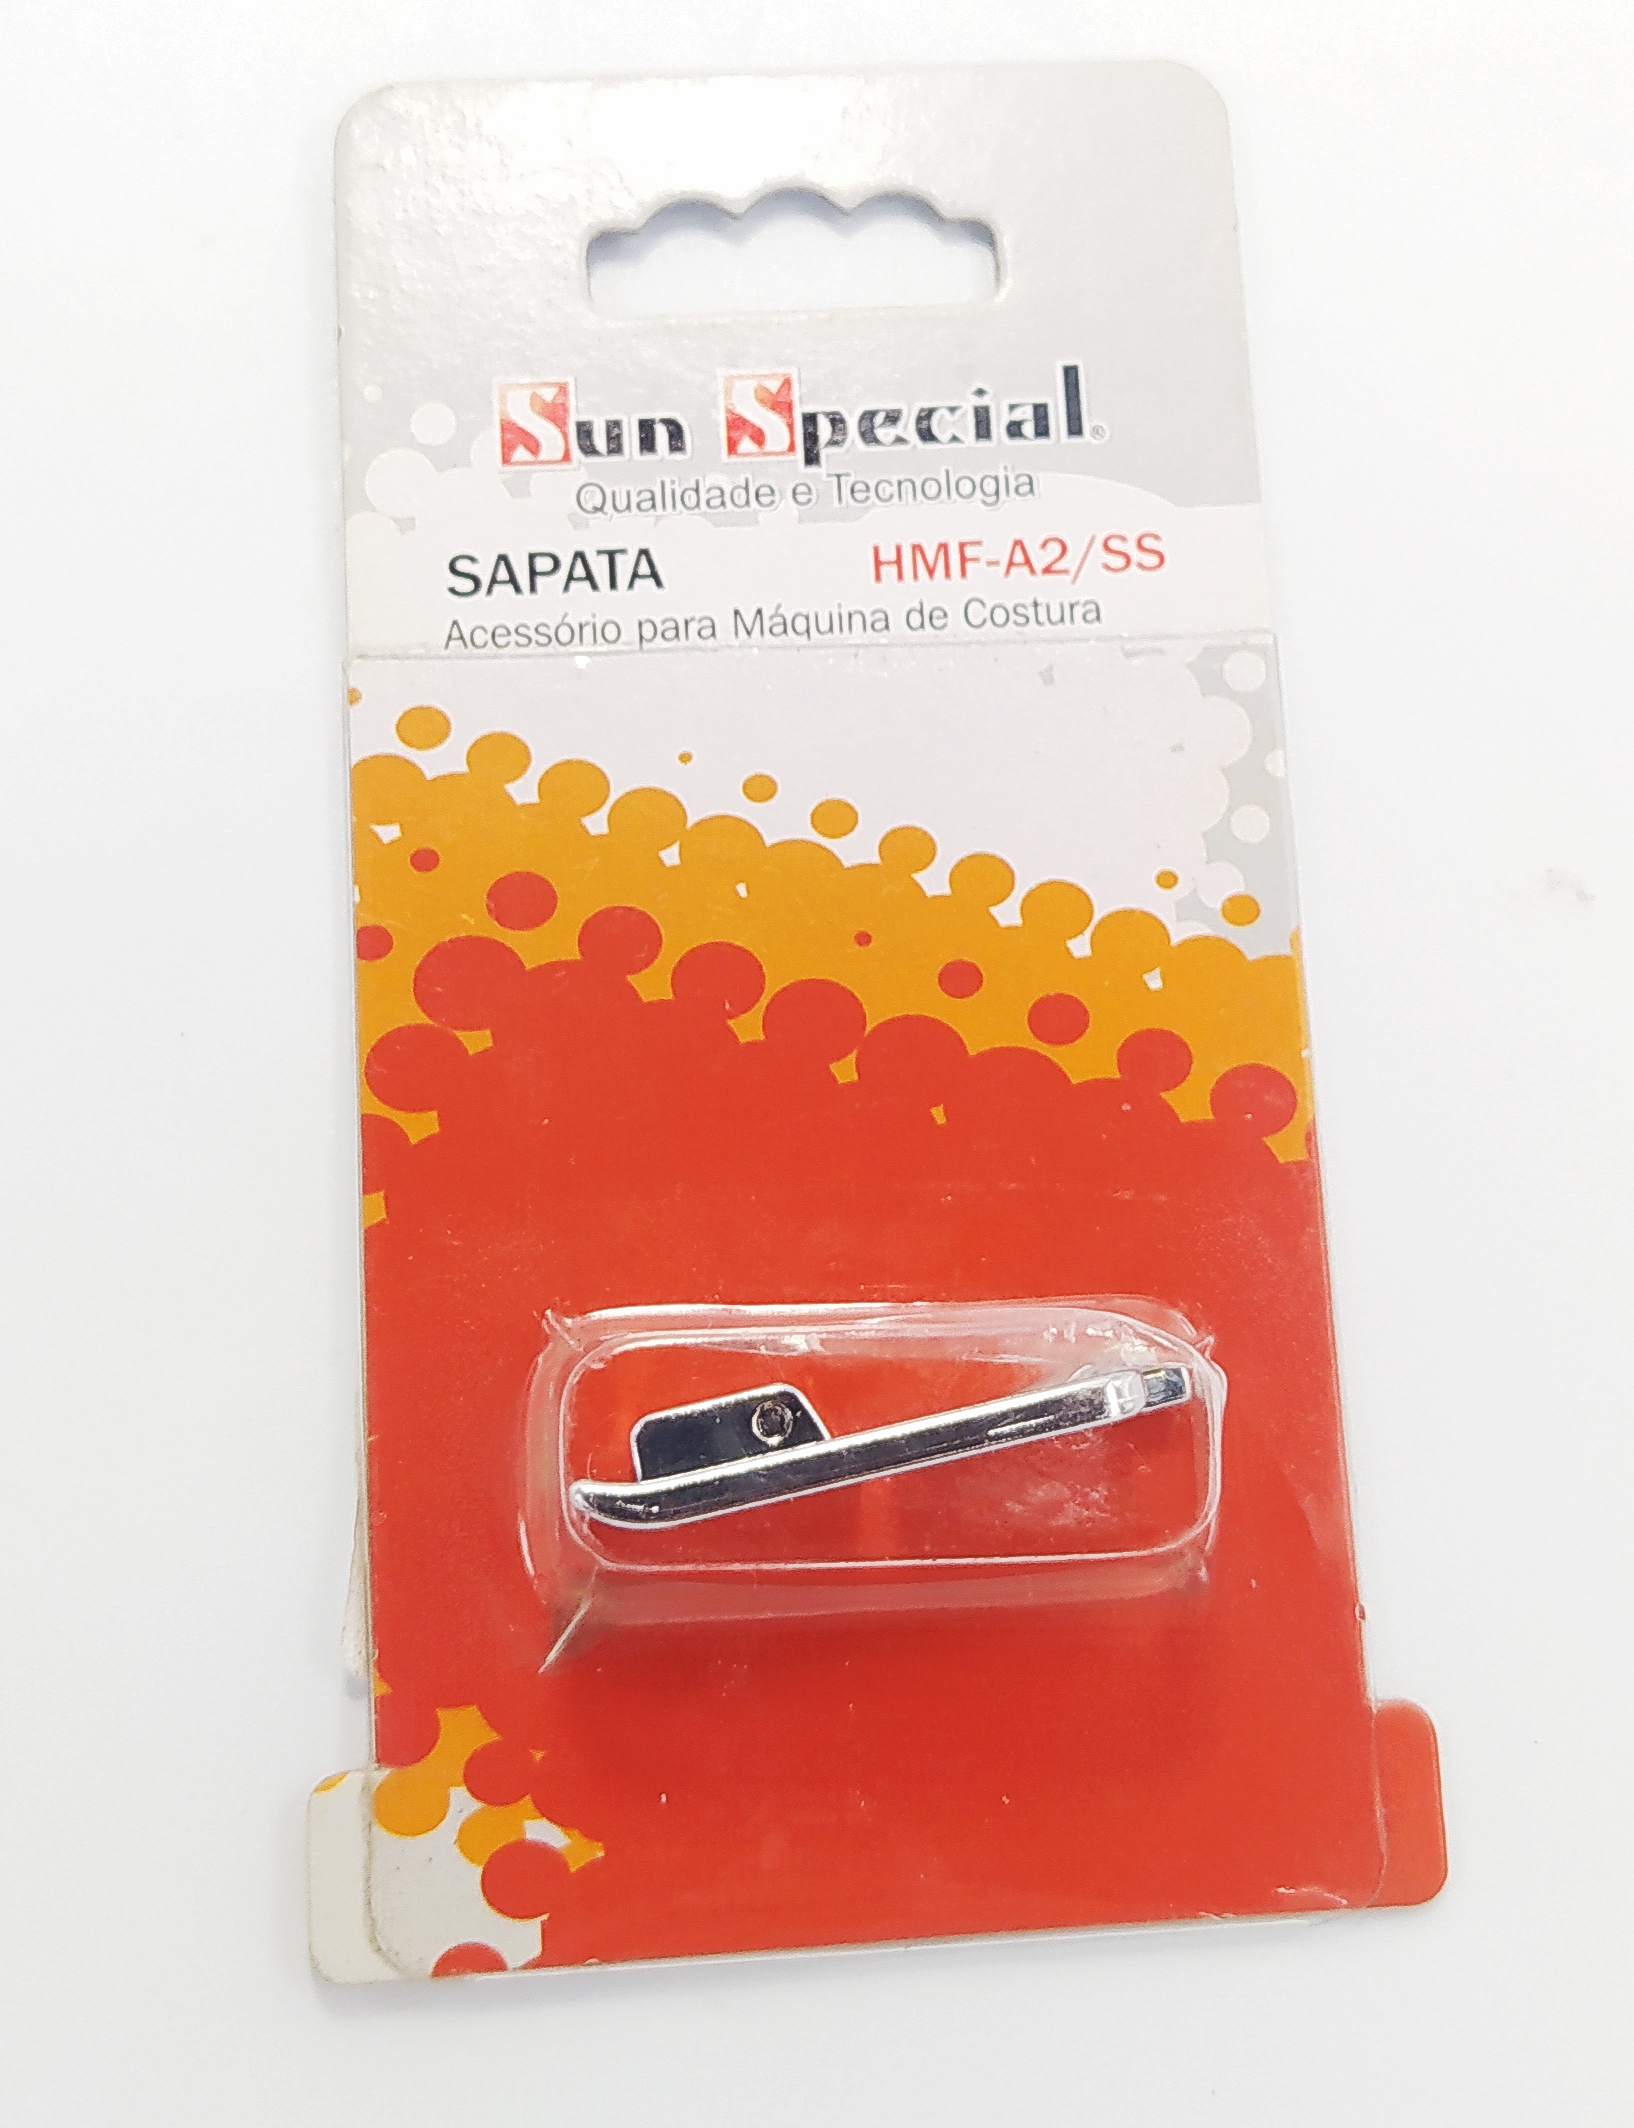 Sapata Maquina Costura HMF-A2/SS Sun Special